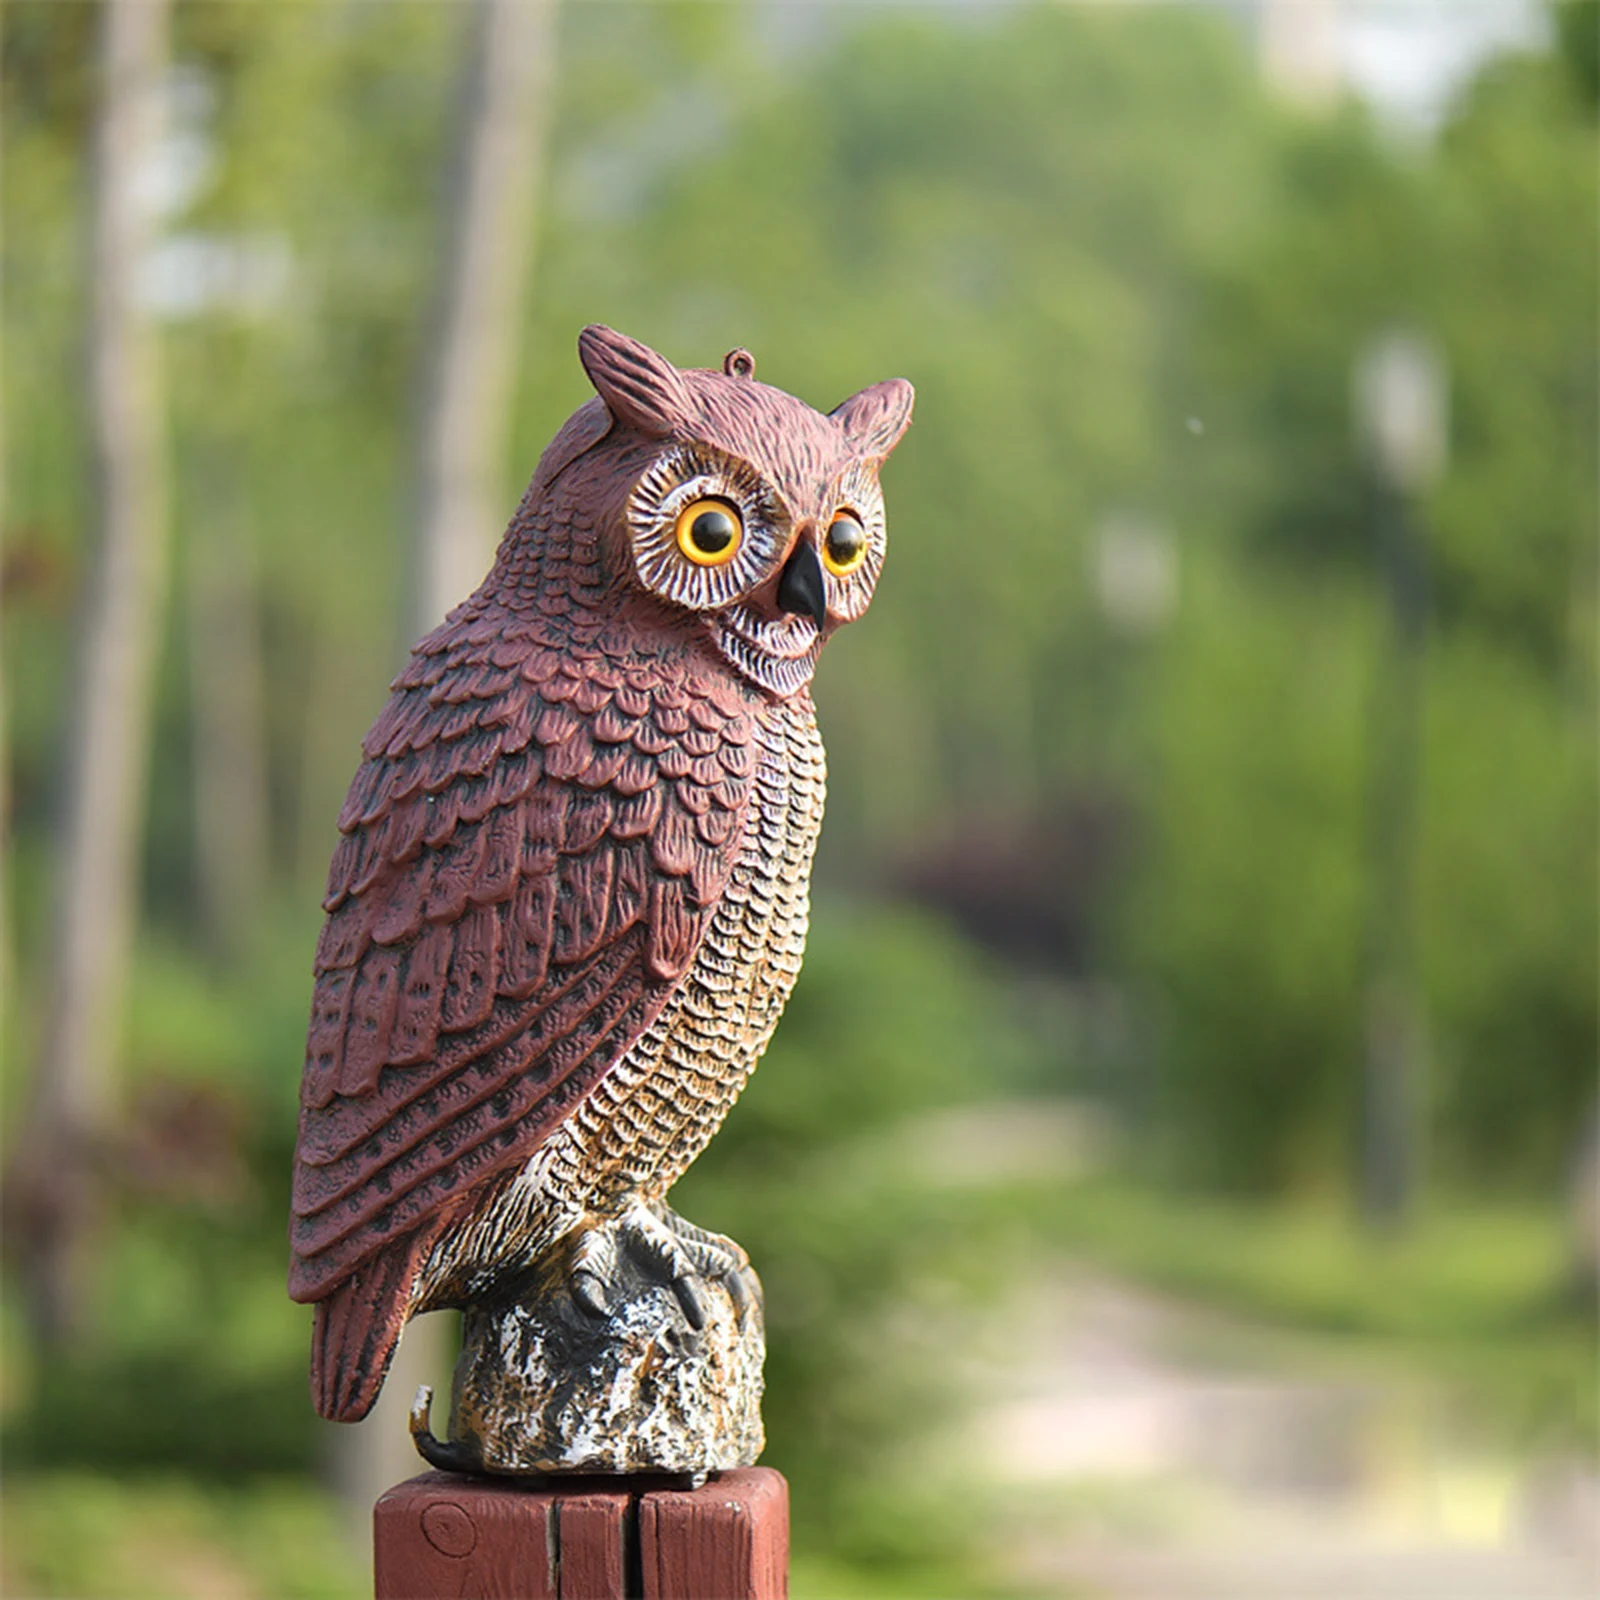 Bird Scarer Owl Decoy Protection Repellent Bird Pest Control Garden Yard Decor Outdoor Bird Scarer Owl Ornament